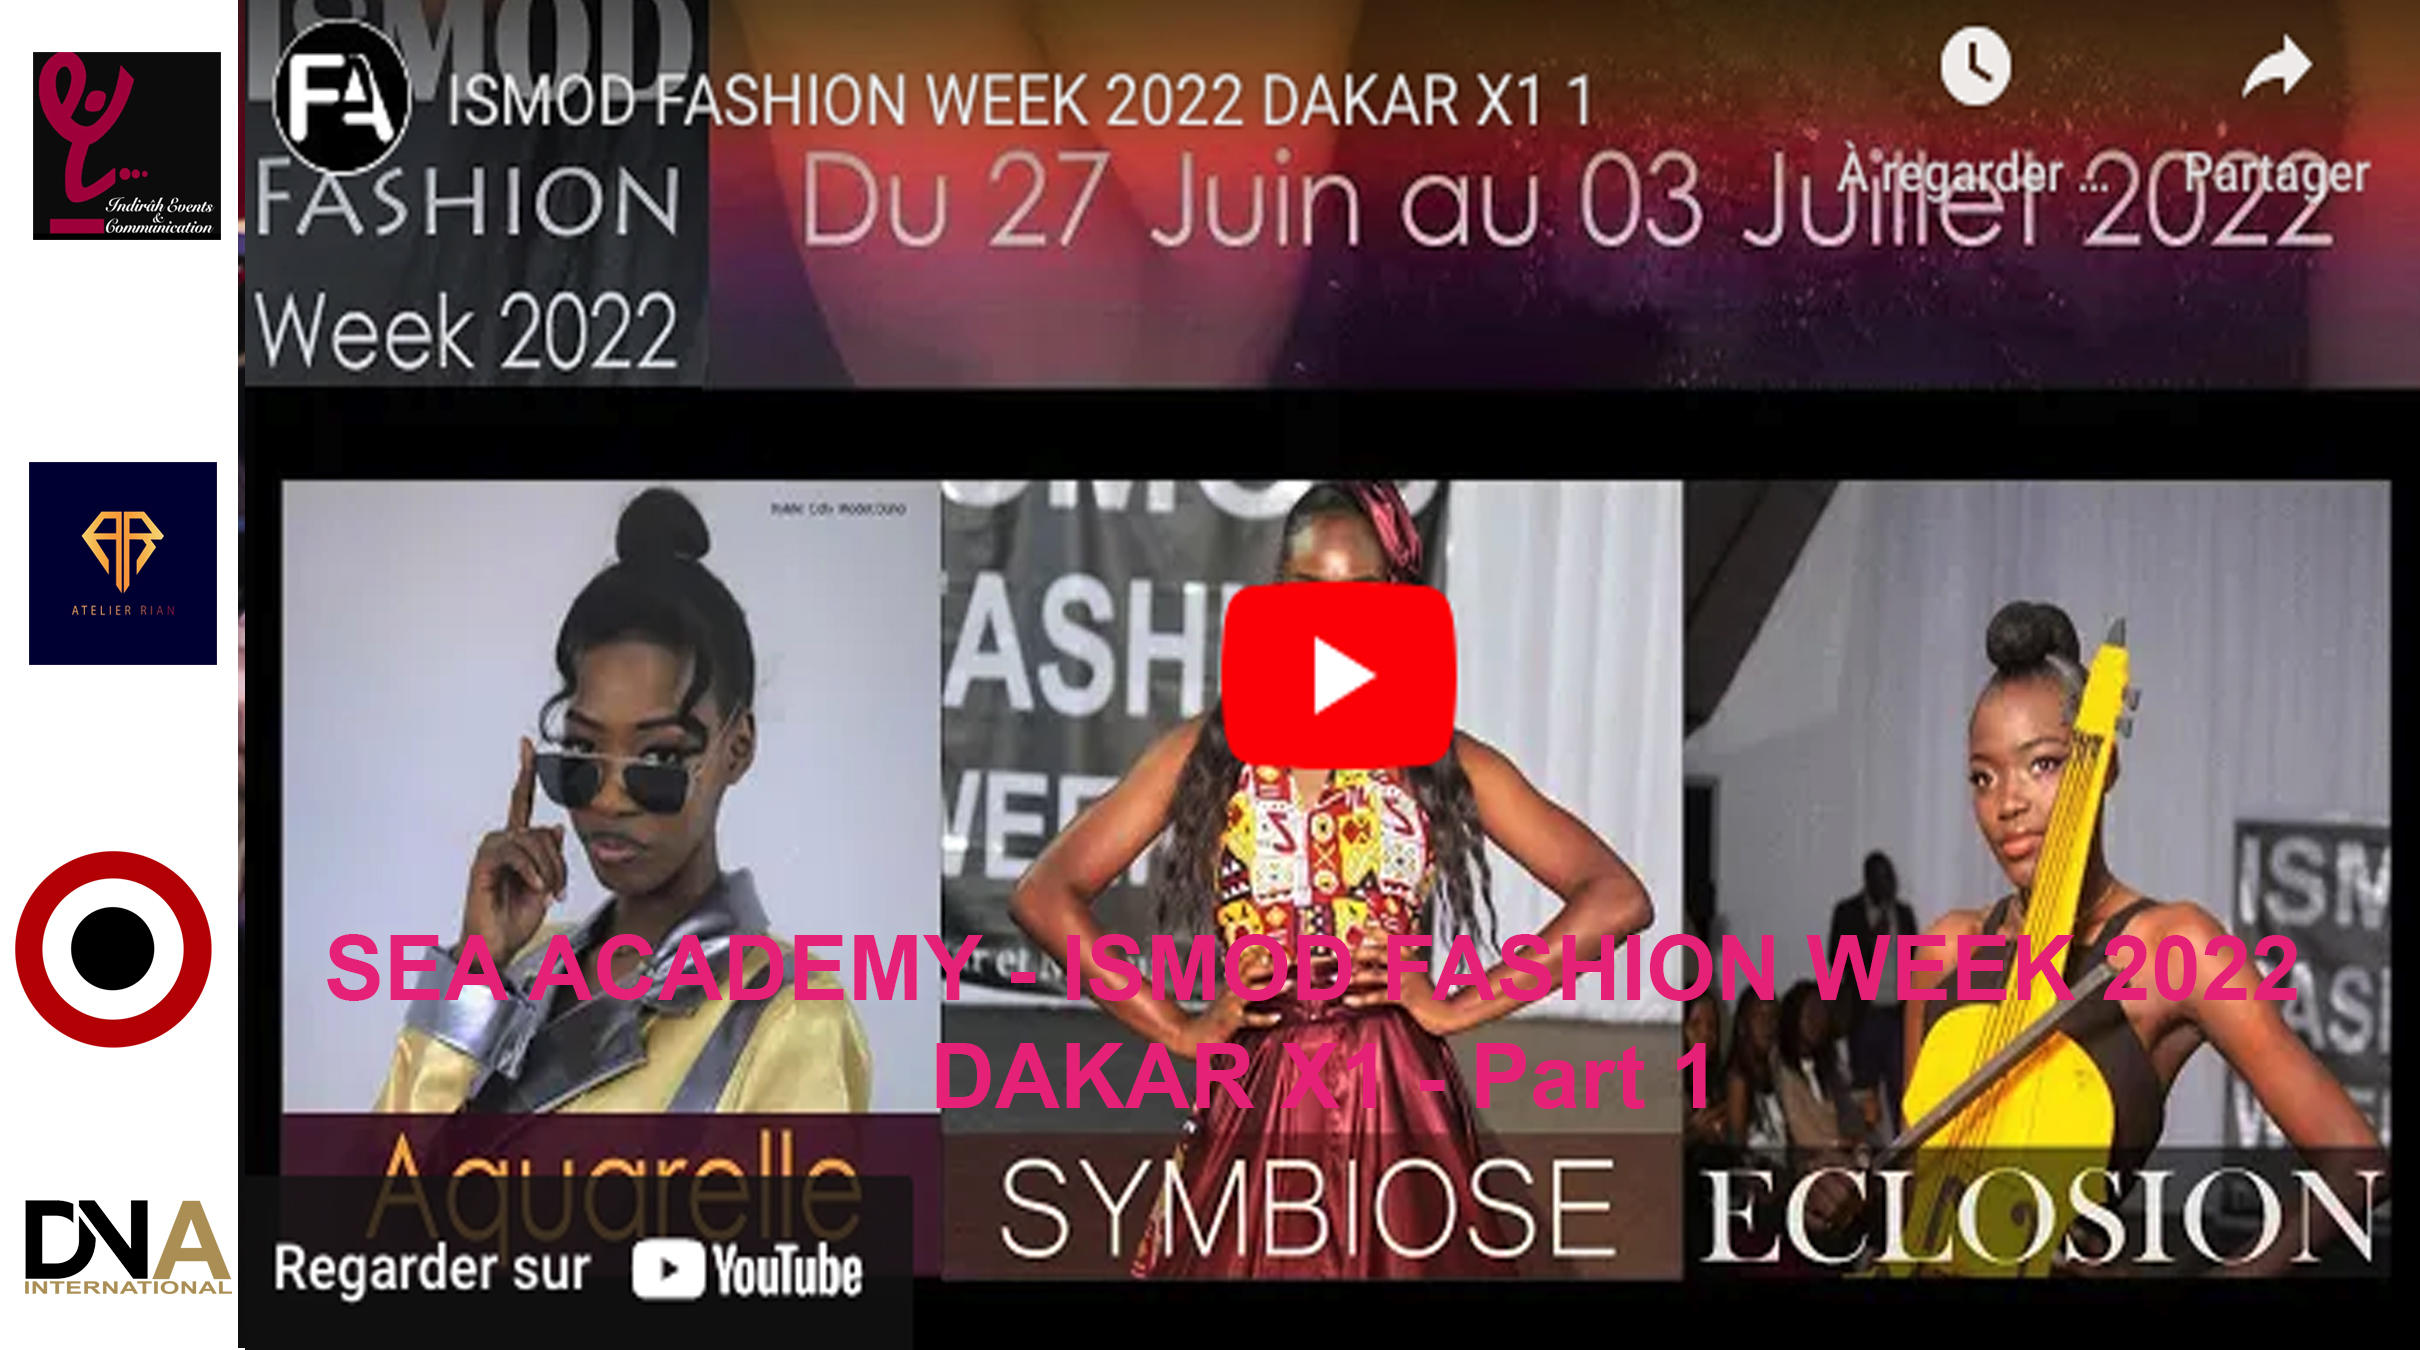 AFRICA-VOGUE-COVER-SEA-ACADEMY-ISMOD-FASHION-WEEK-2022-DAKAR-X1-Part-1-DN-AFRICA-Media-Partner